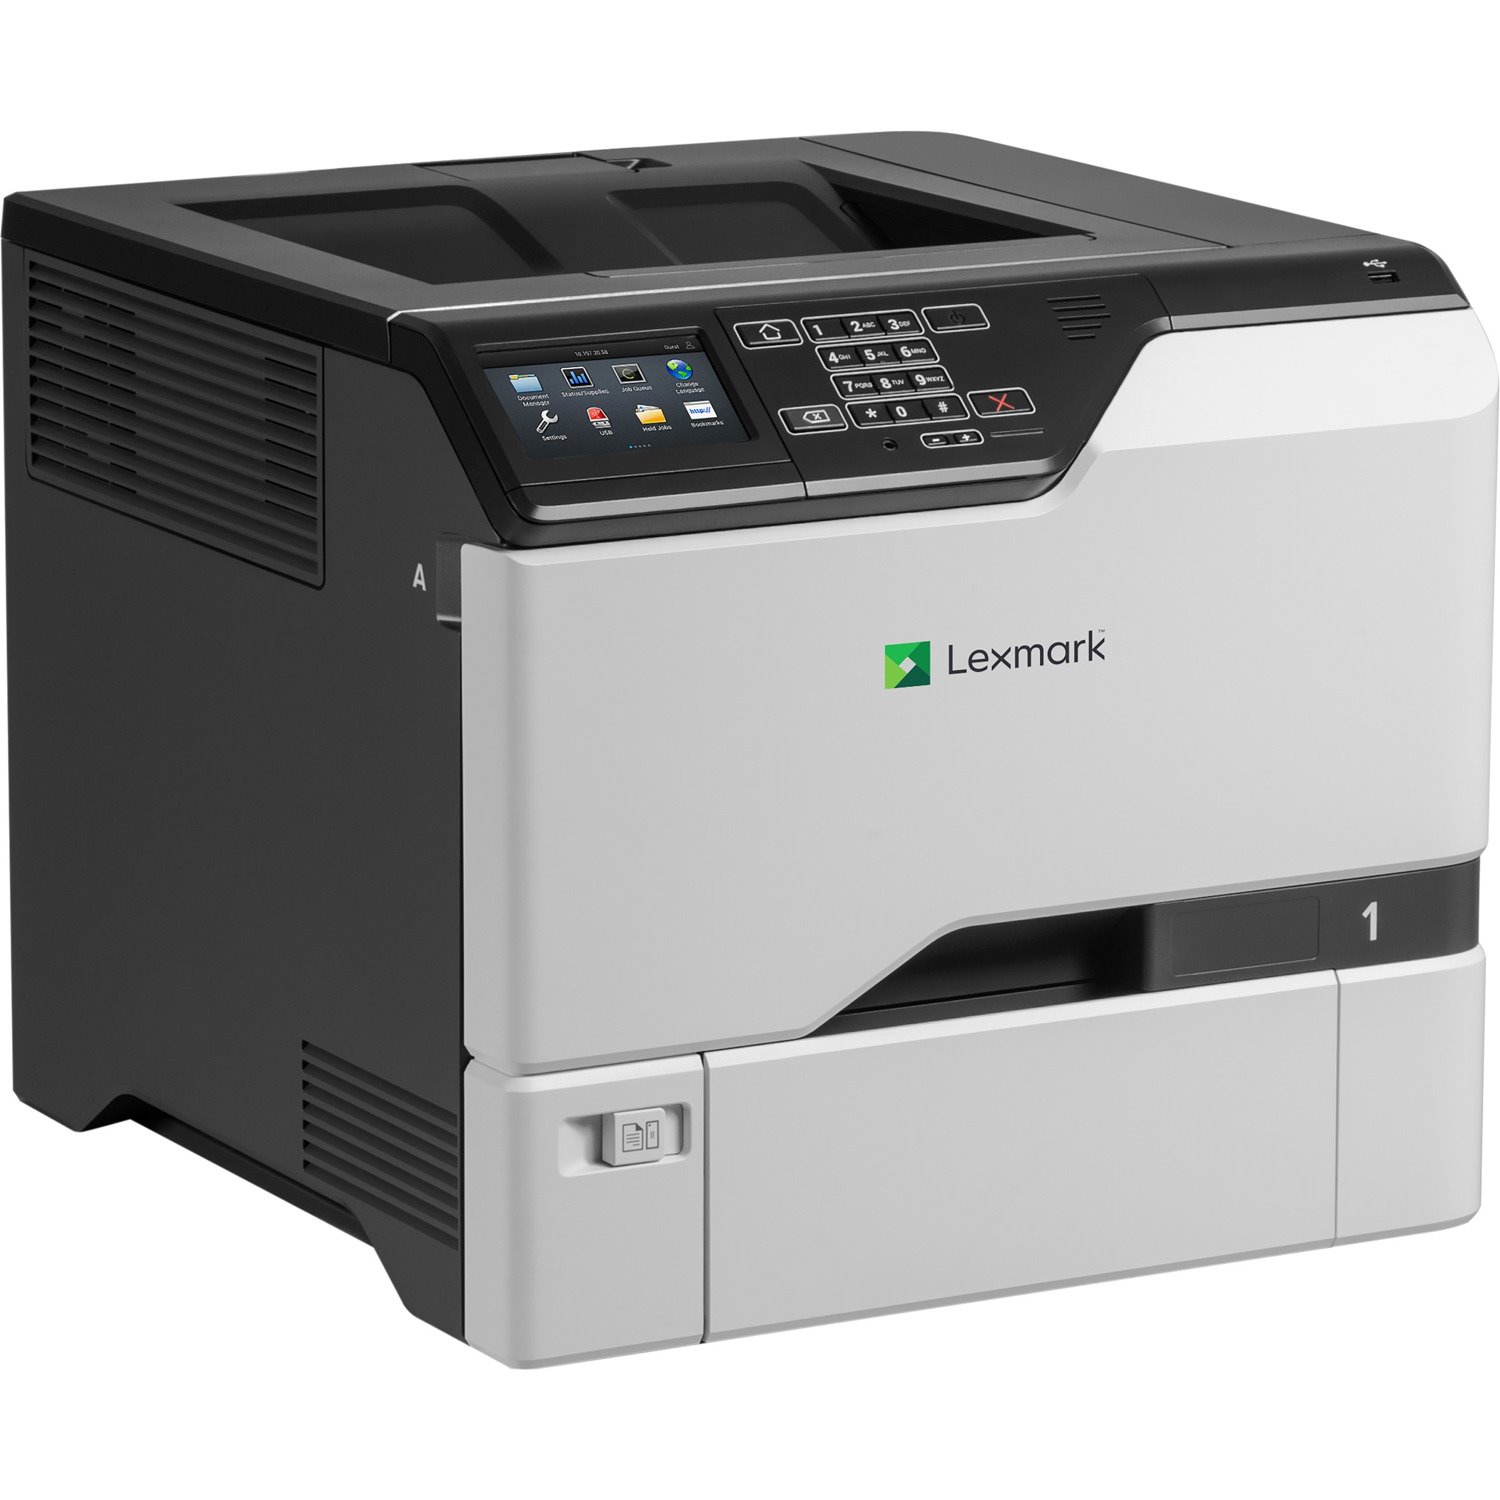 Lexmark CS725 CS725de Desktop Laser Printer - Color